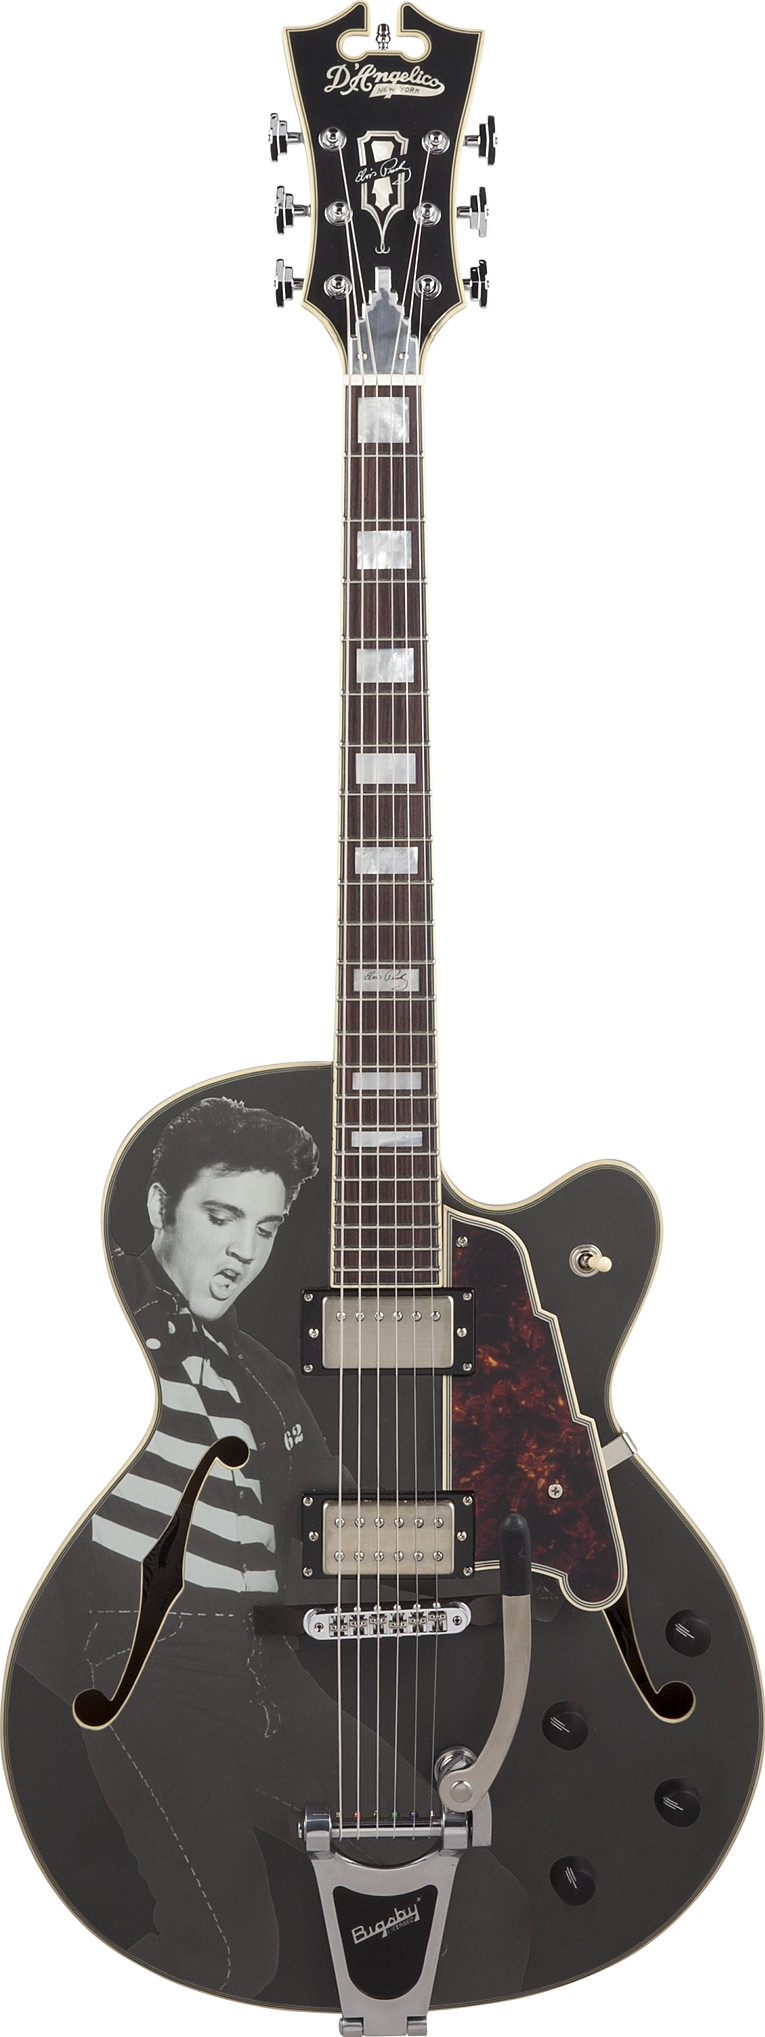 Excel Elvis Presley 175 by D`Angelico Guitars